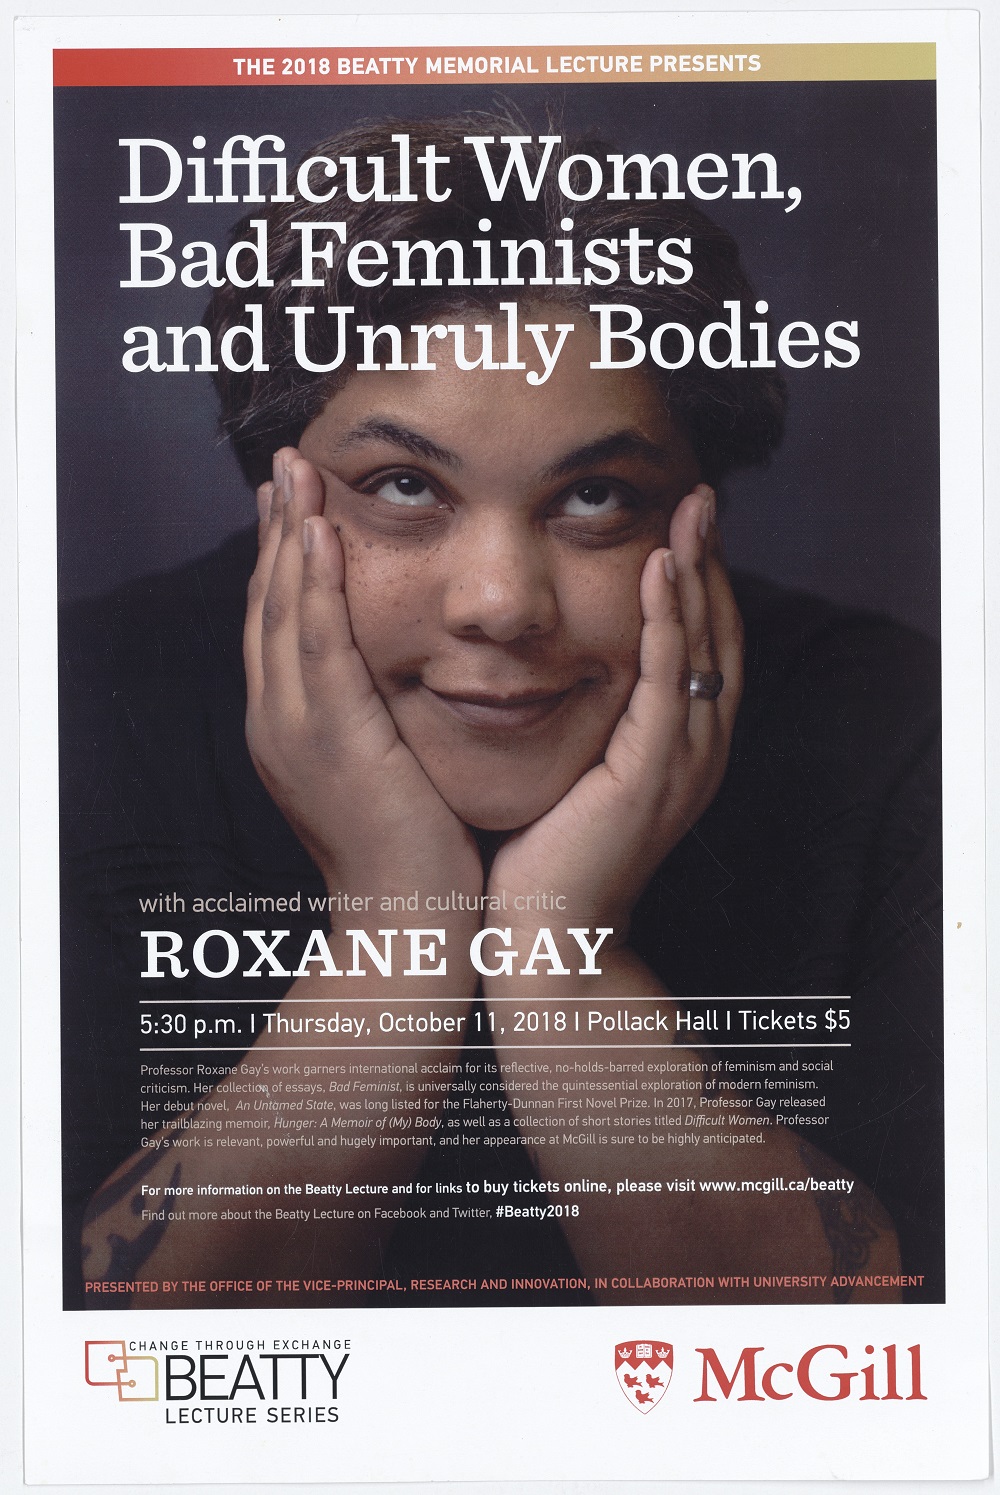 Roxane Gay